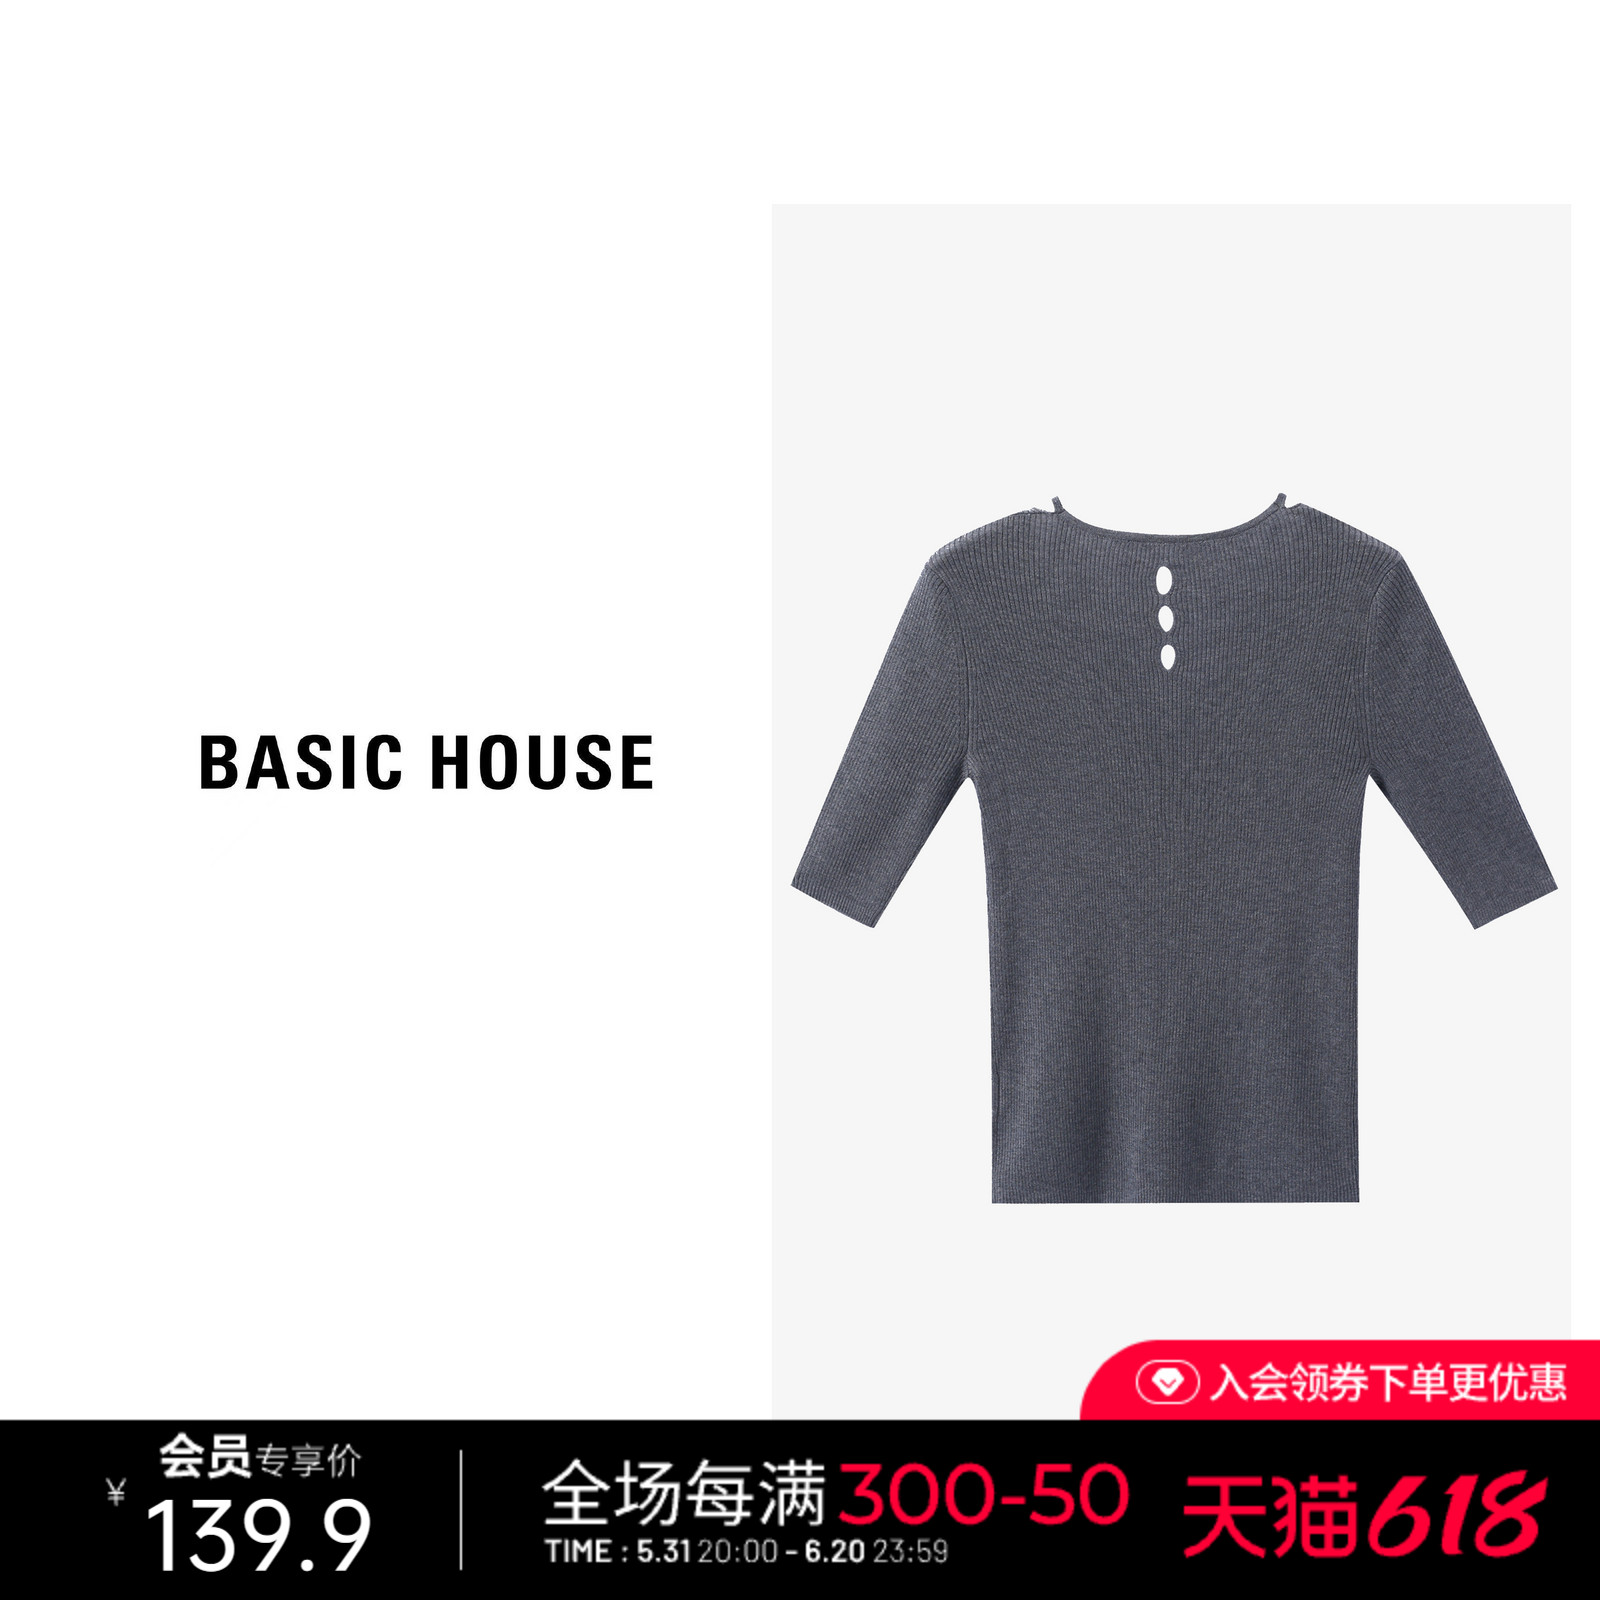 Basic House/百家好纯色